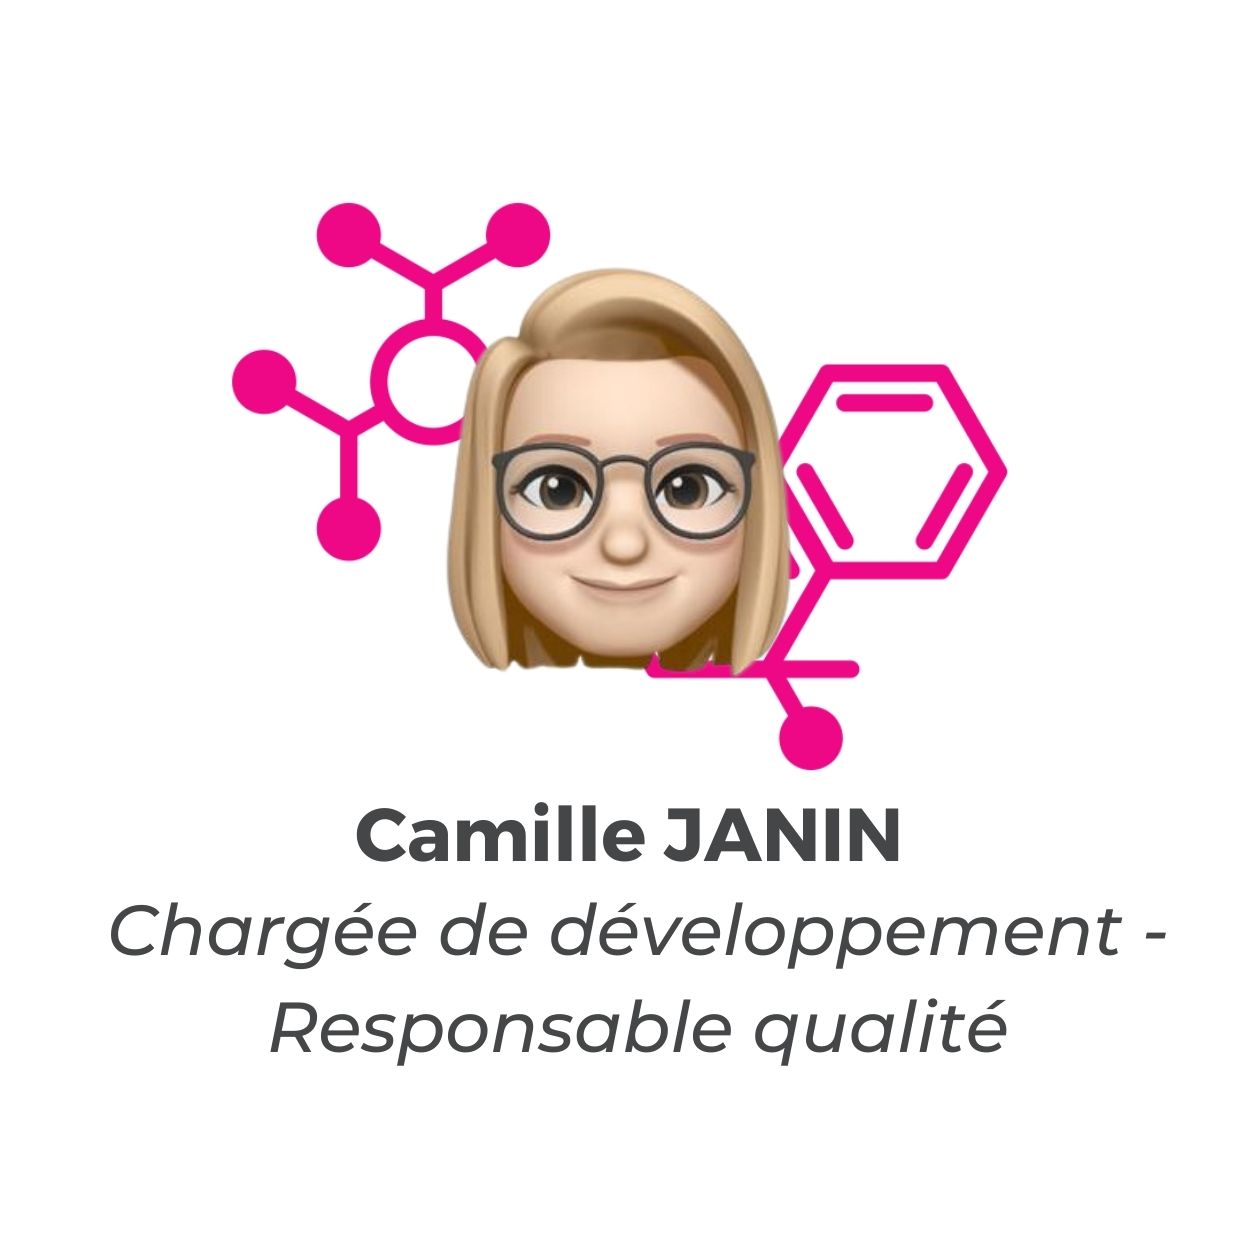 Camille JANIN